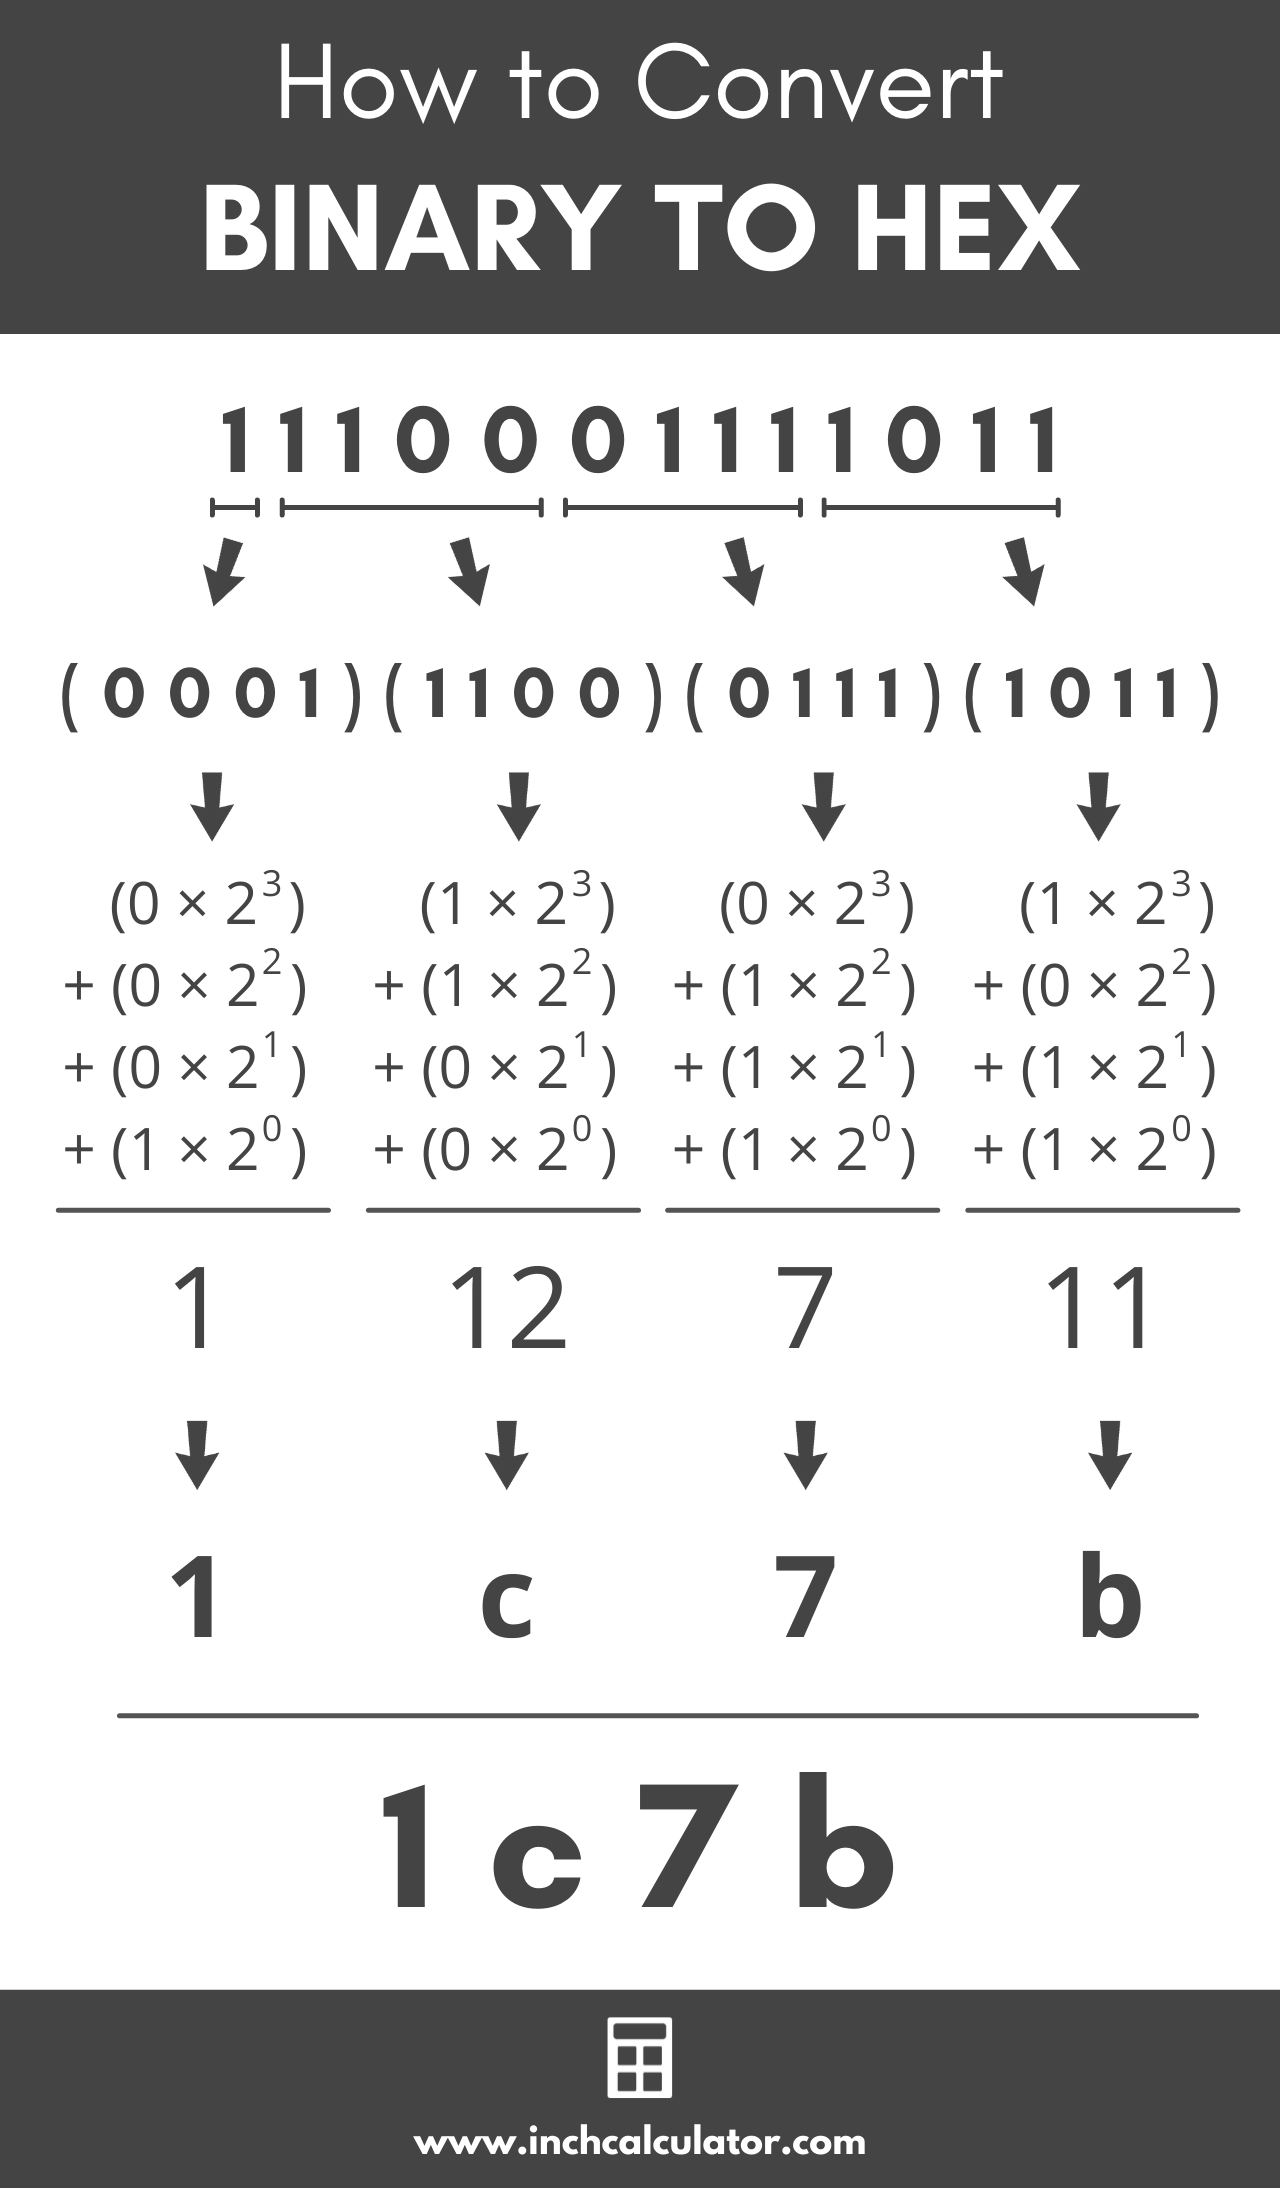 a creditor waterfall lake Binary to Hexadecimal Converter - Inch Calculator